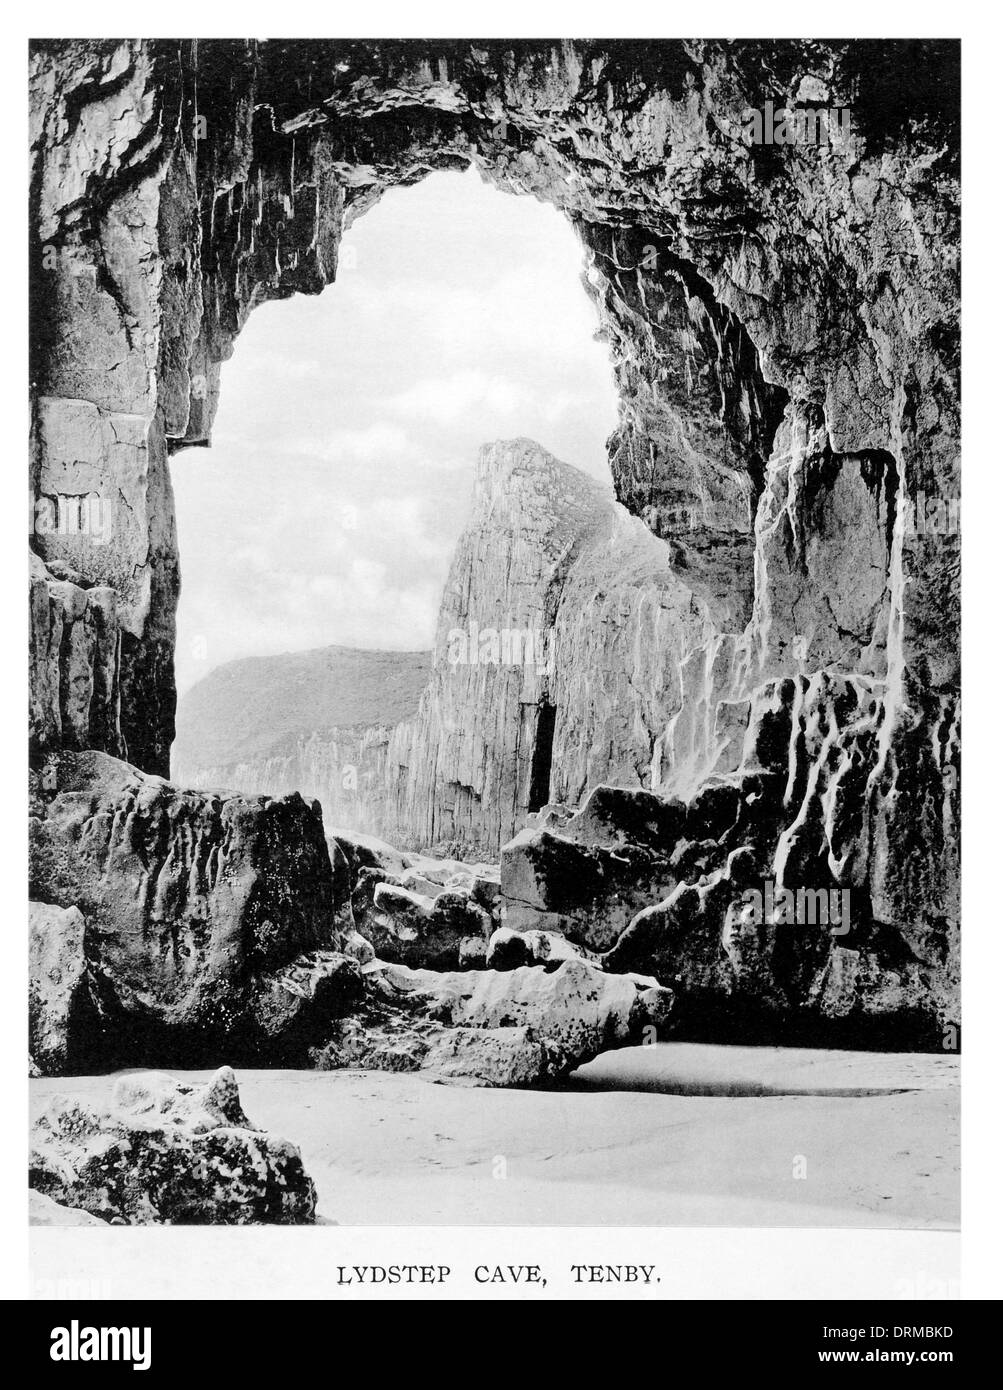 Lydstep grotta, vicino Tenby Pembrokeshire Wales fotografato circa 1910 Foto Stock